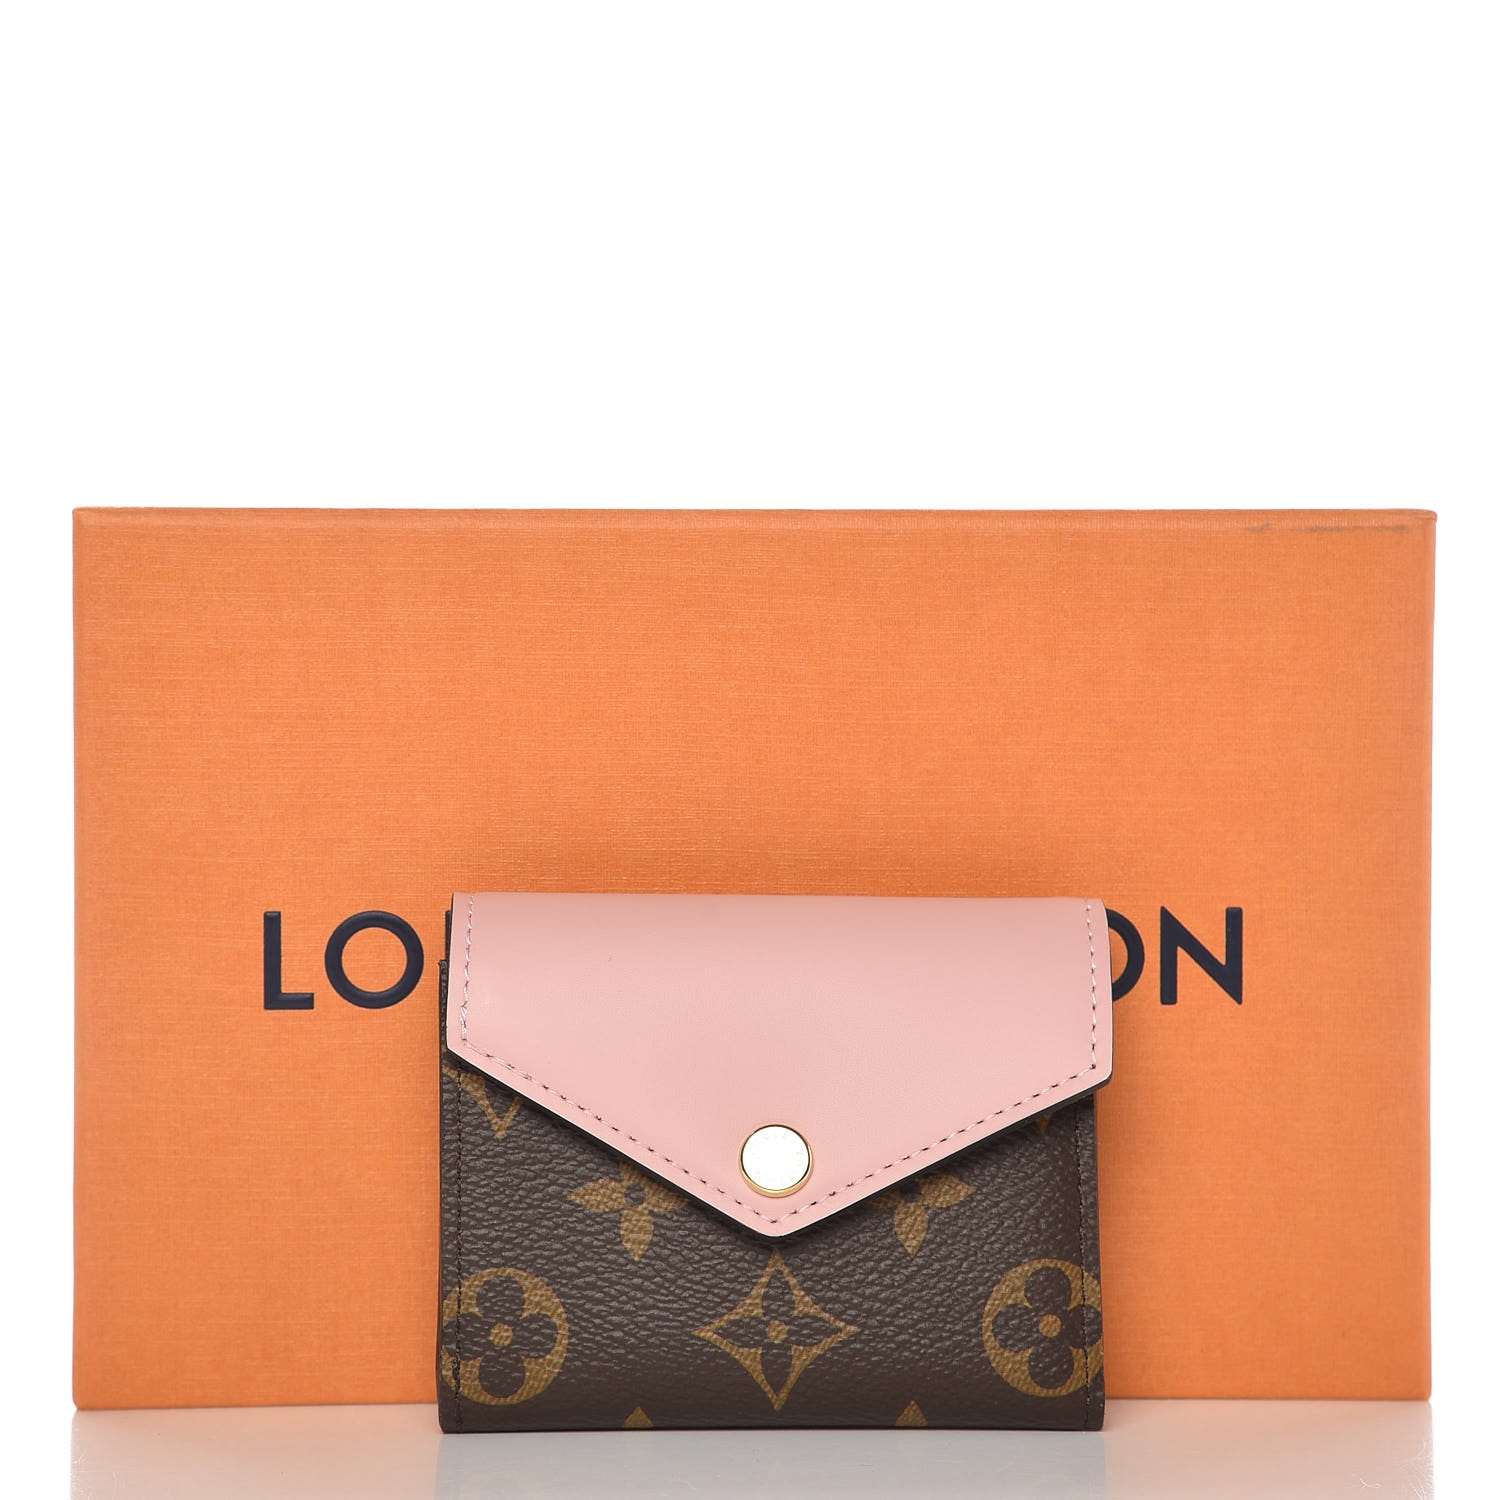 Louis Vuitton Wallet Zoe Monogram Rose Ballerine